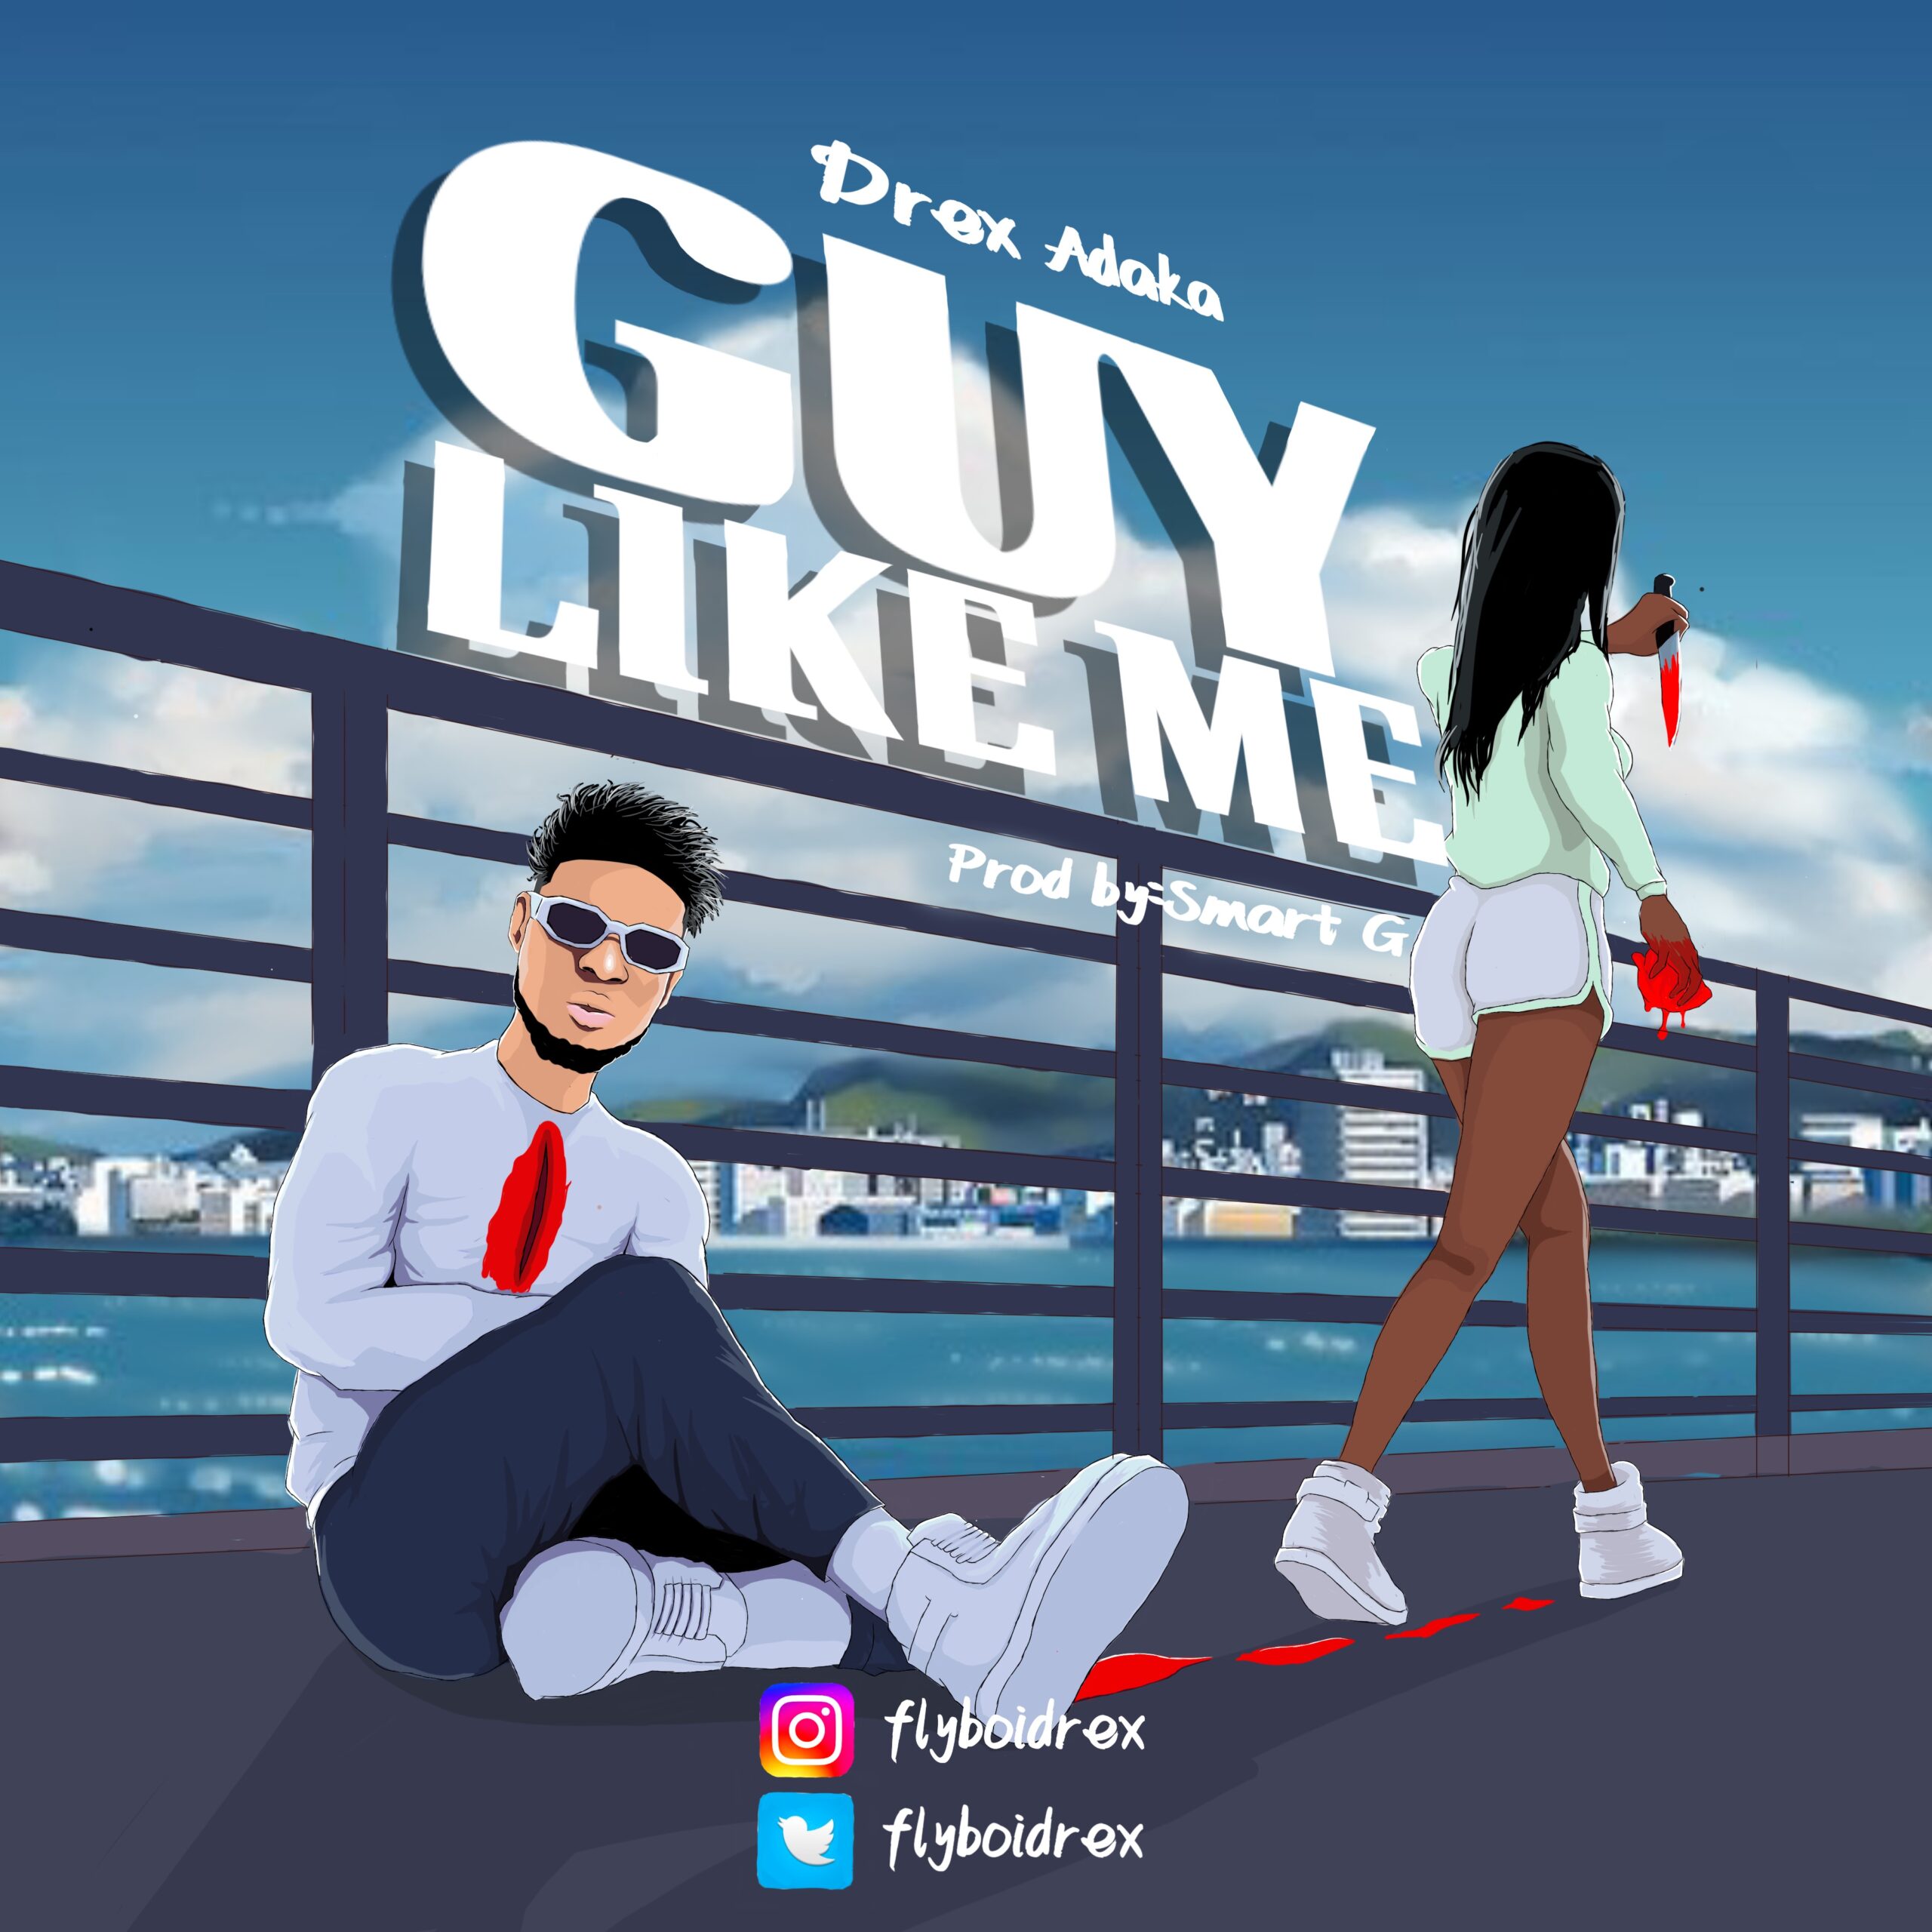 Drex Adaka -"Guy Like Me" 1